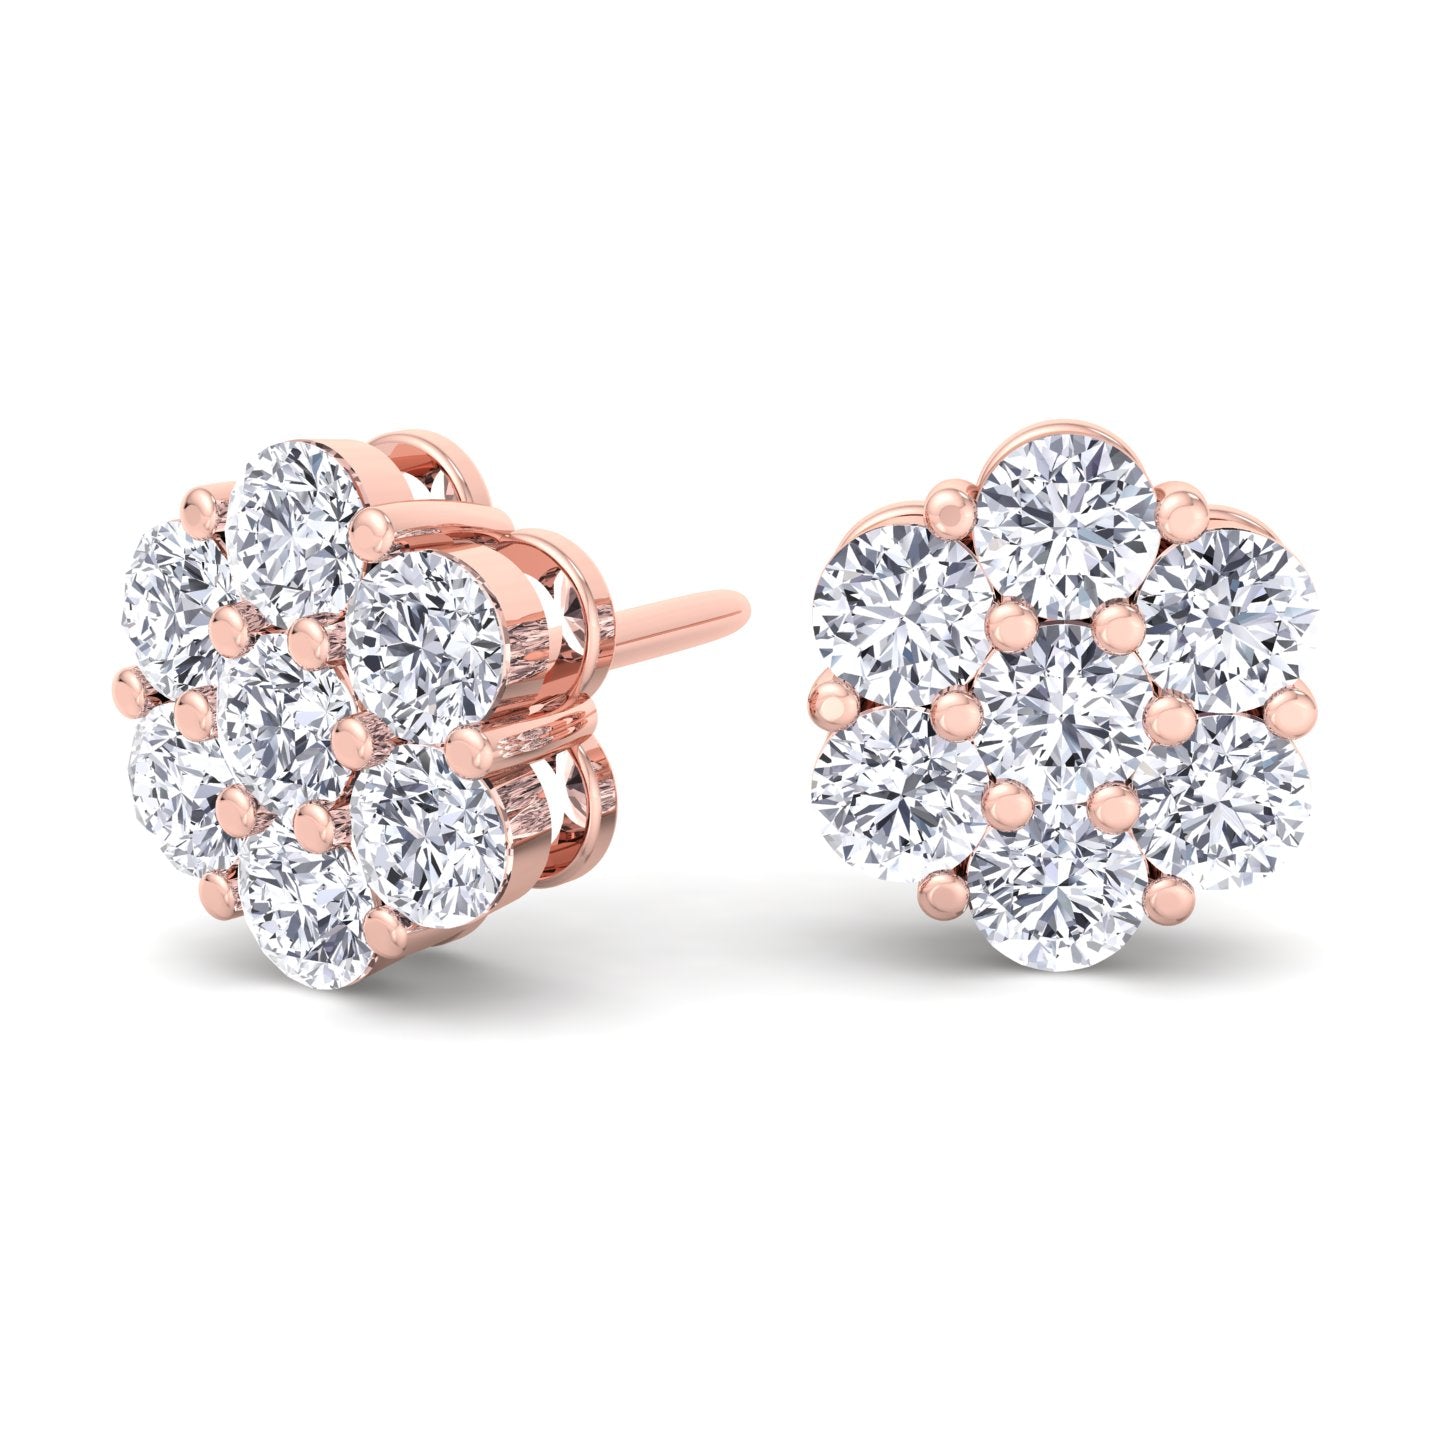 Pave Set Round Cut Diamond Flower Stud Earrings 18K Rose Gold 0.52Cttw |  eBay